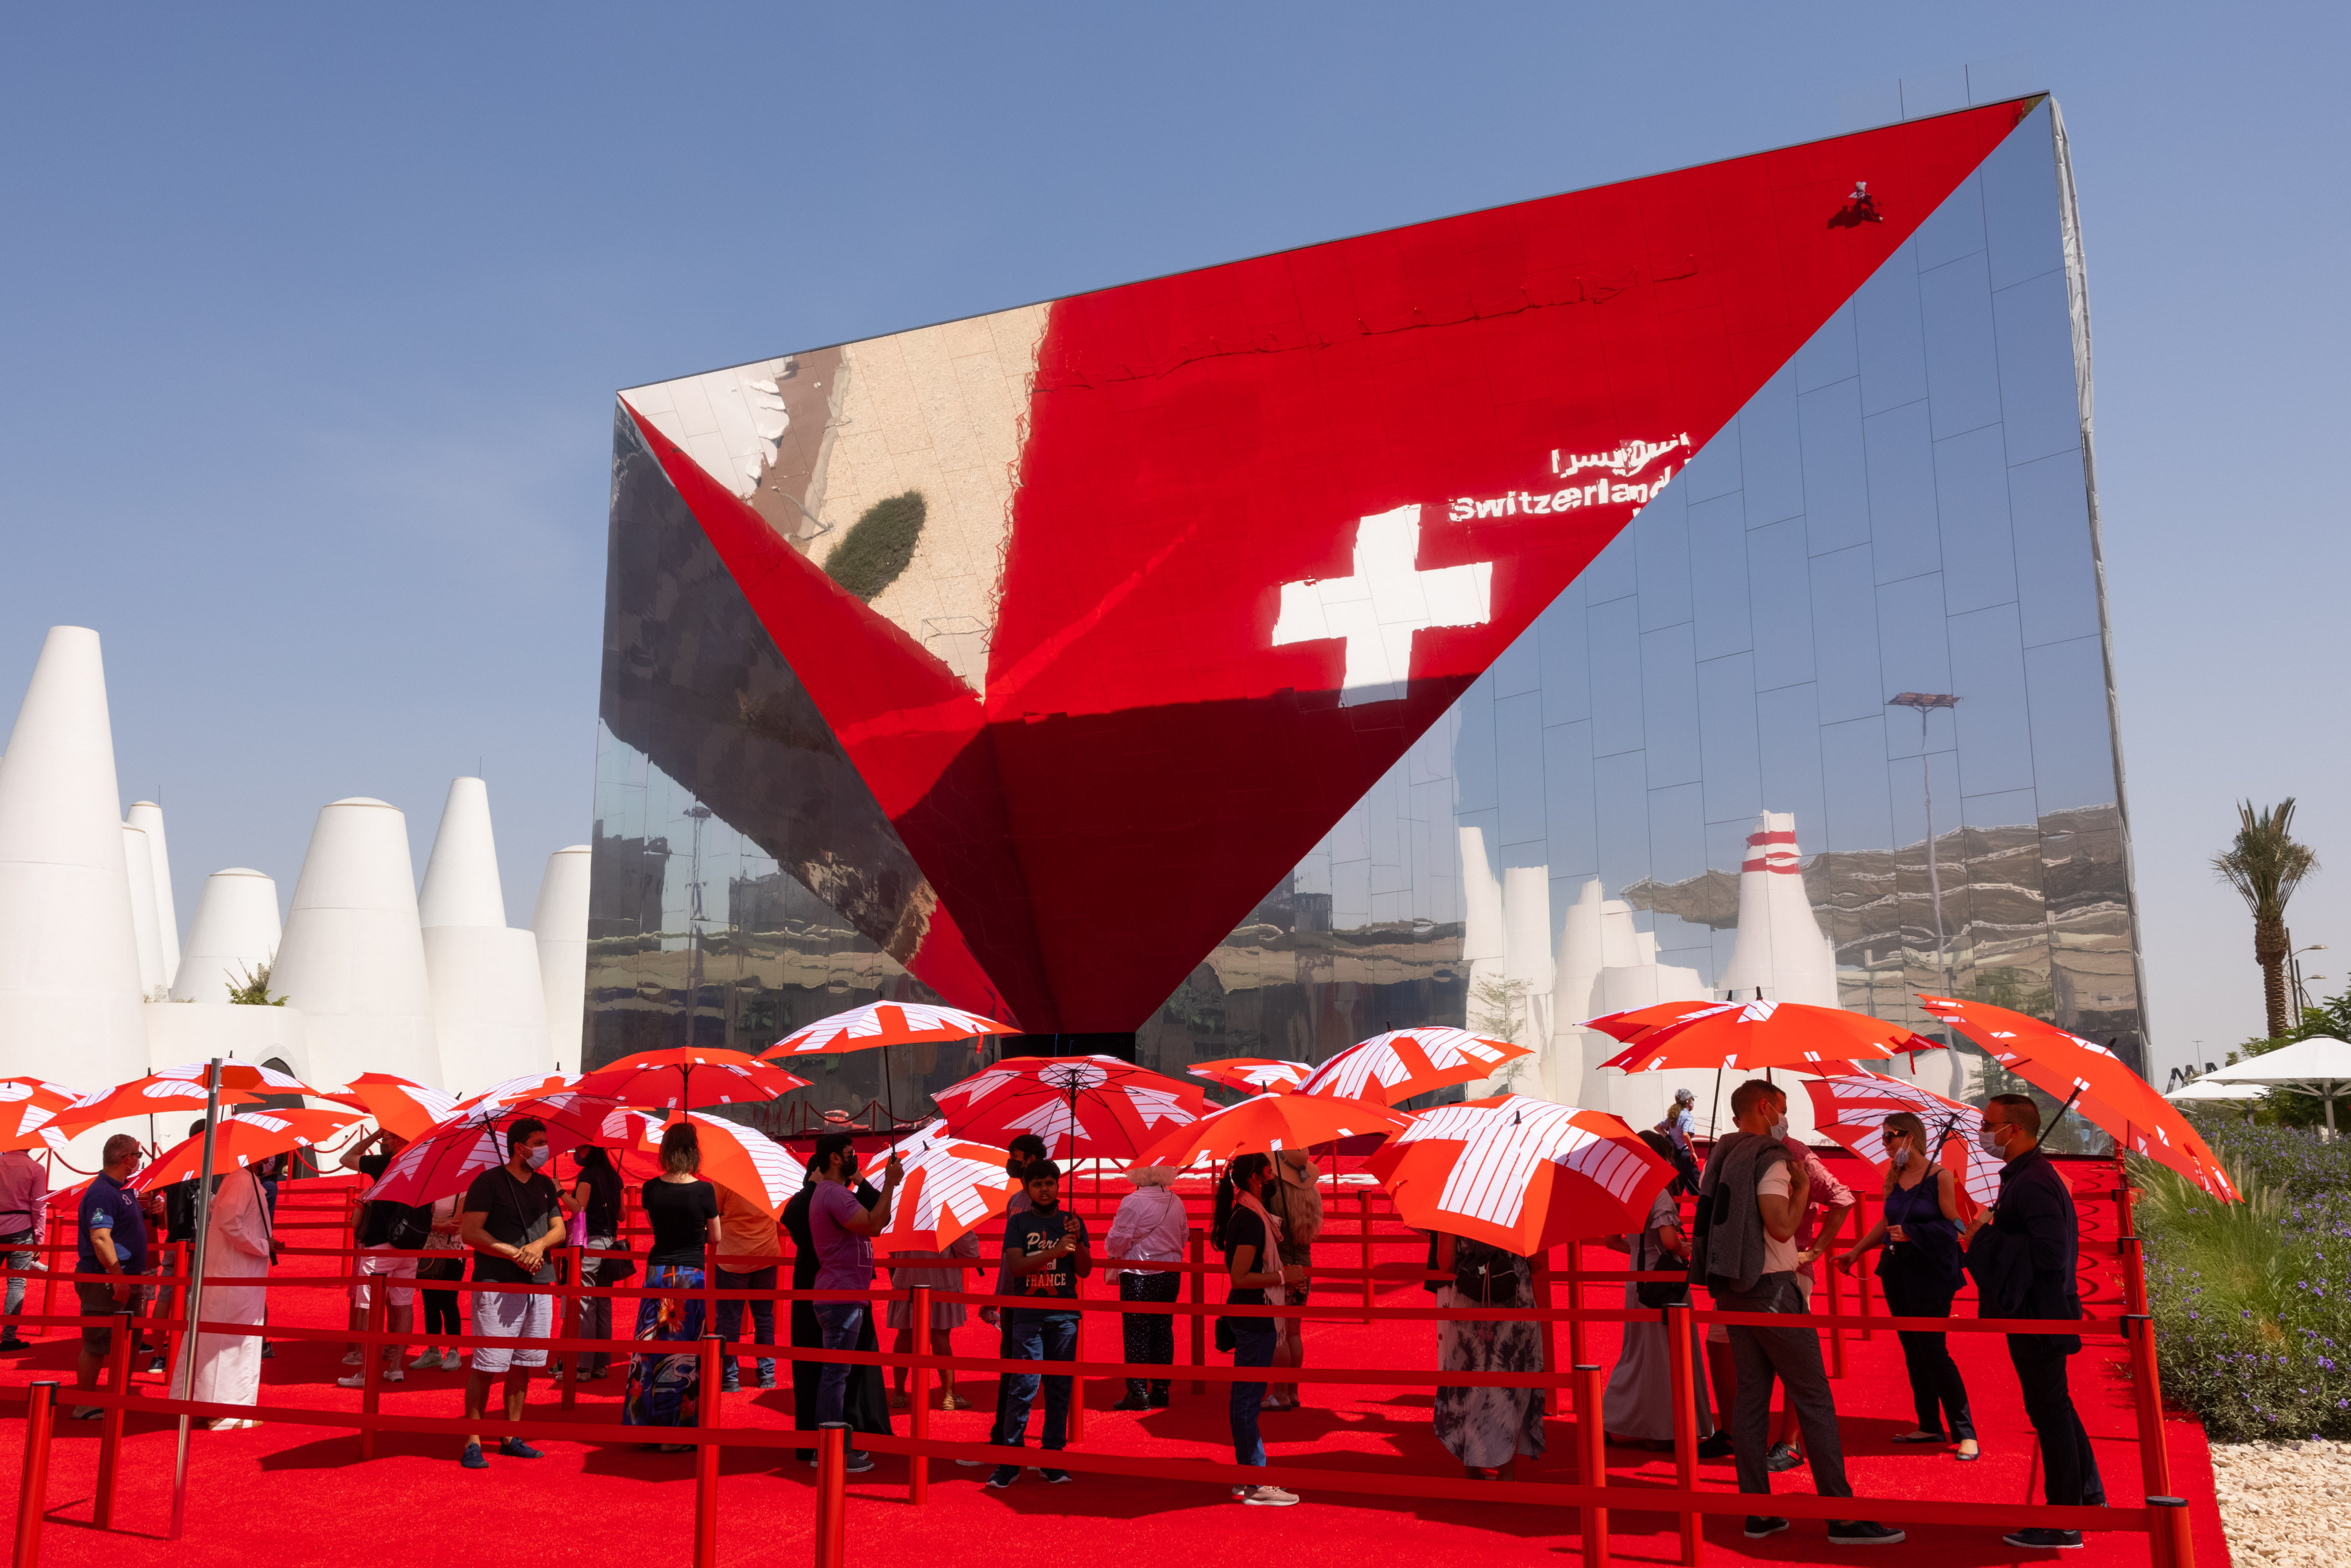 Swiss pavilion - red carpet